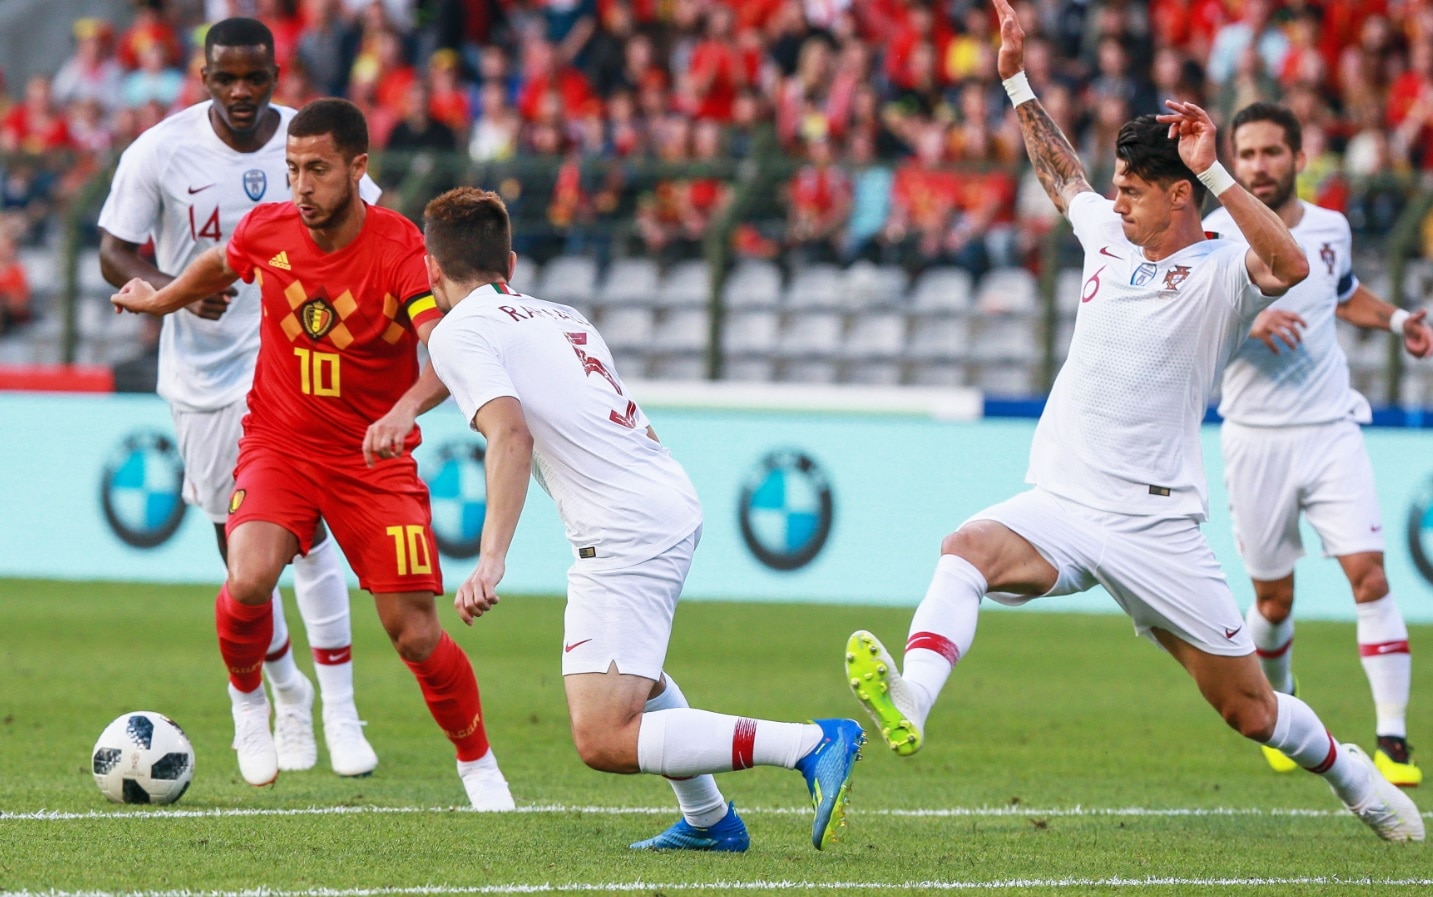 Eden Hazard of Belgium (2-L) during the International Friendly soccer match between Belgium and Portugal 